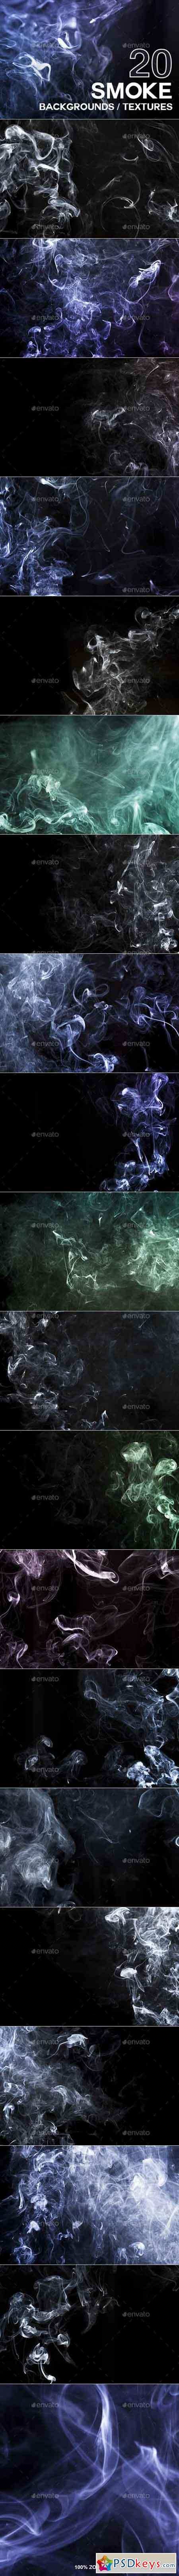 20 Smoke Backgrounds Textures 20348204